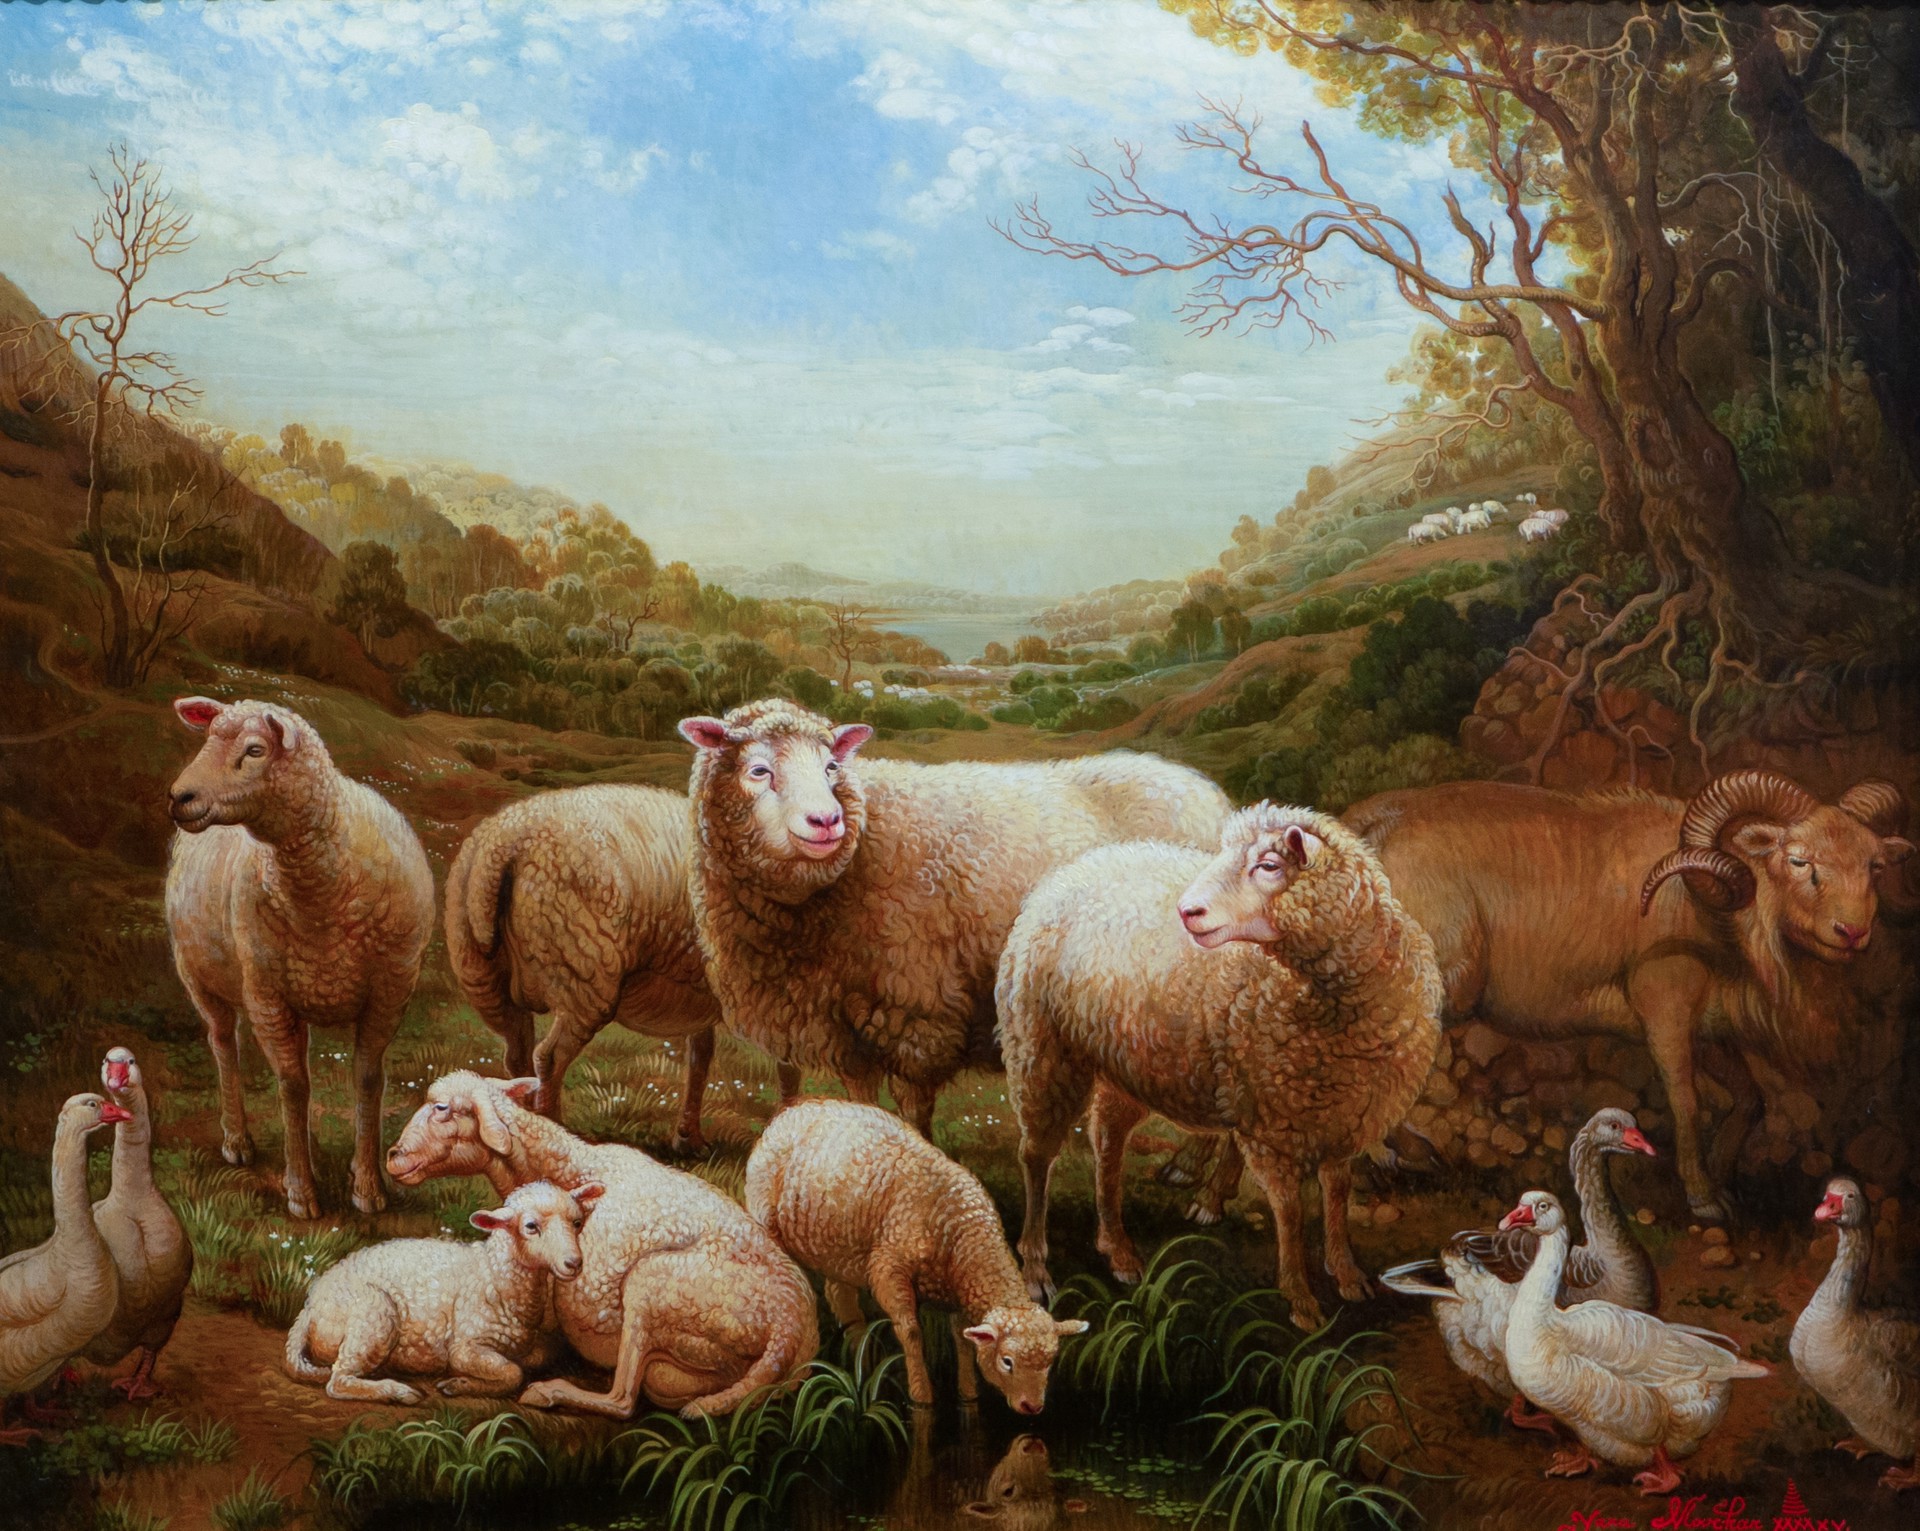 Sheep in the Meadow by Yana Movchan